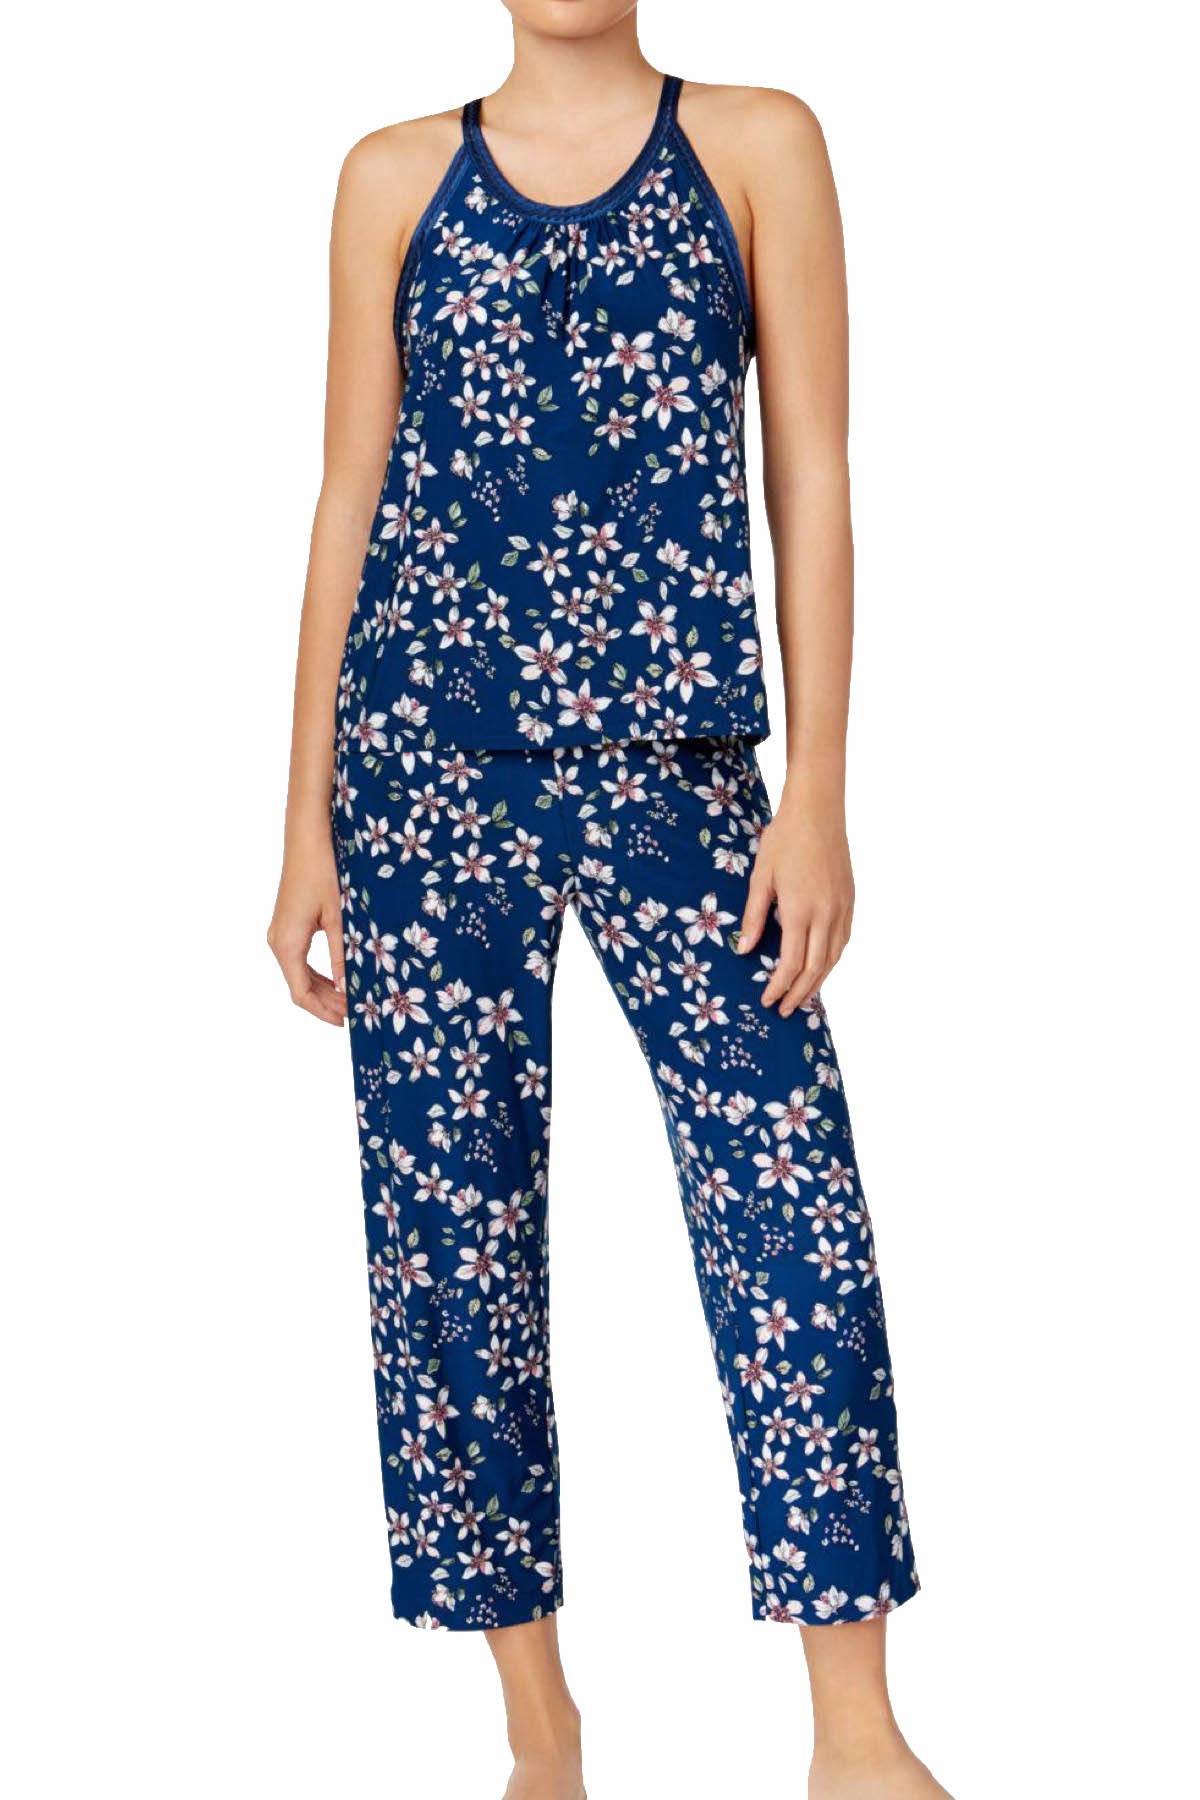 Alfani Intimates Teal Fall-Blossom Satin-Trimmed Printed Pajama 2-Piece Set